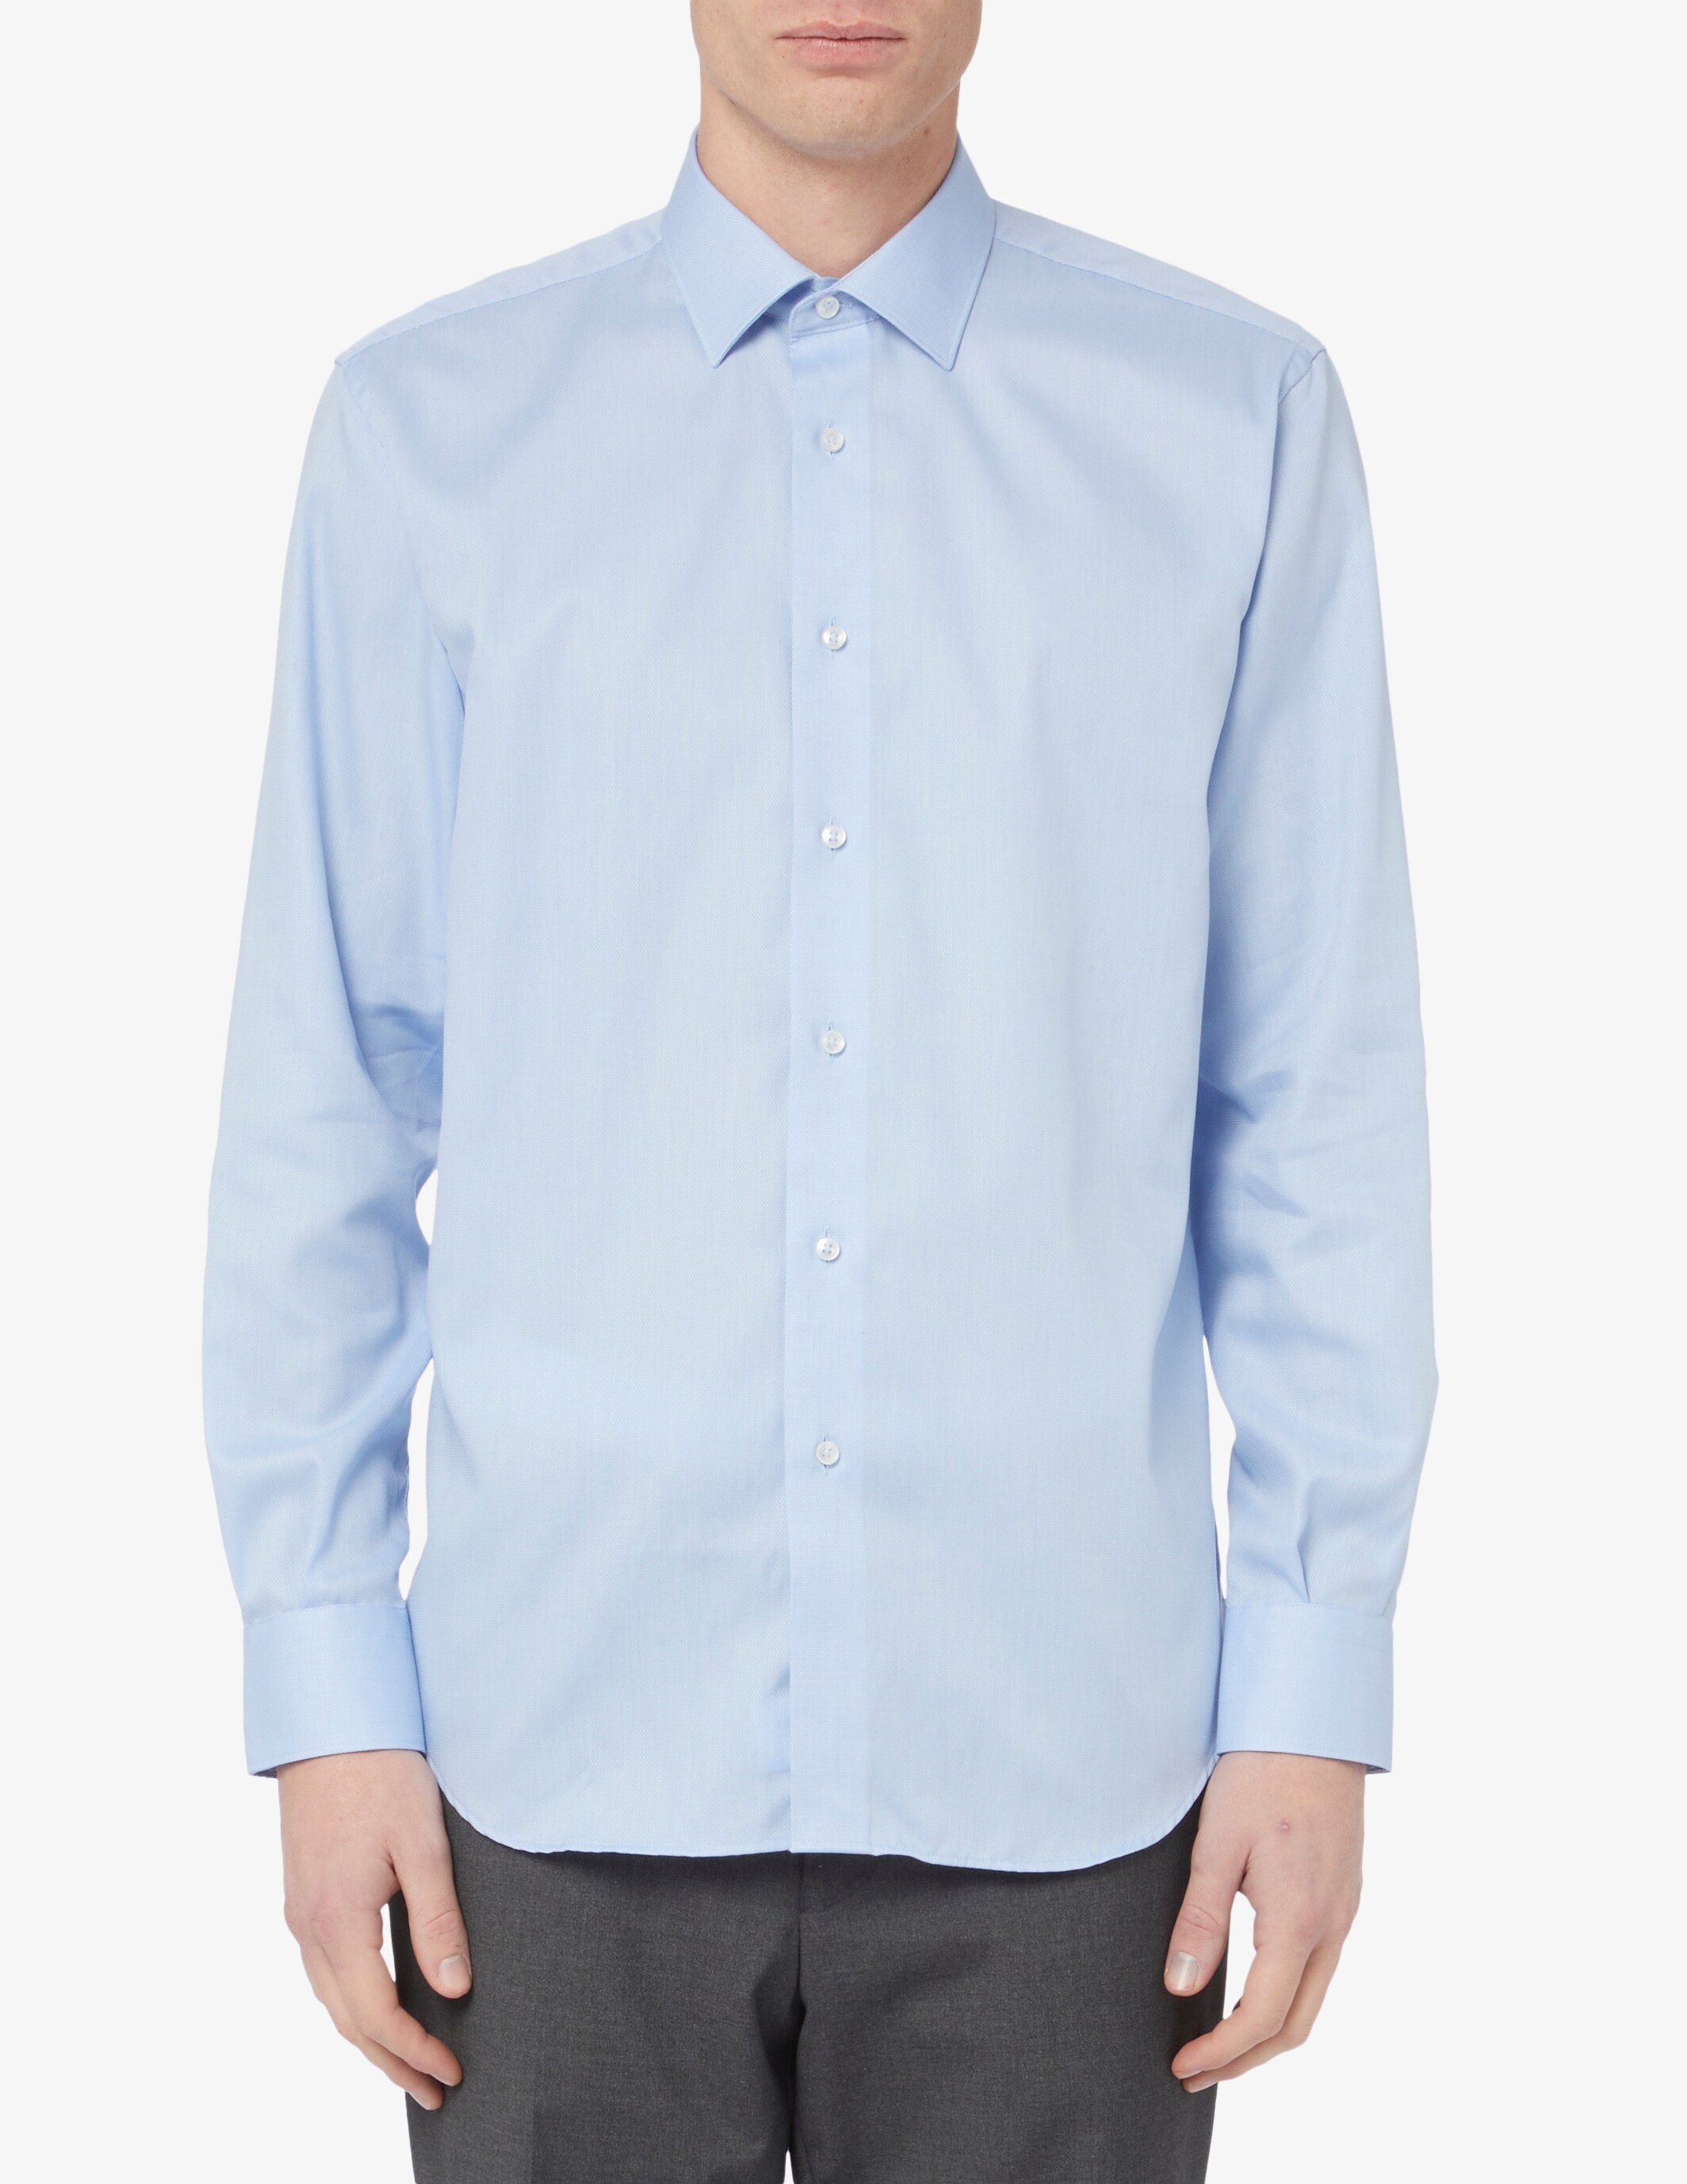 Рубашка обычная, без утюга Sartoria Italiana, светло-синий цена и фото